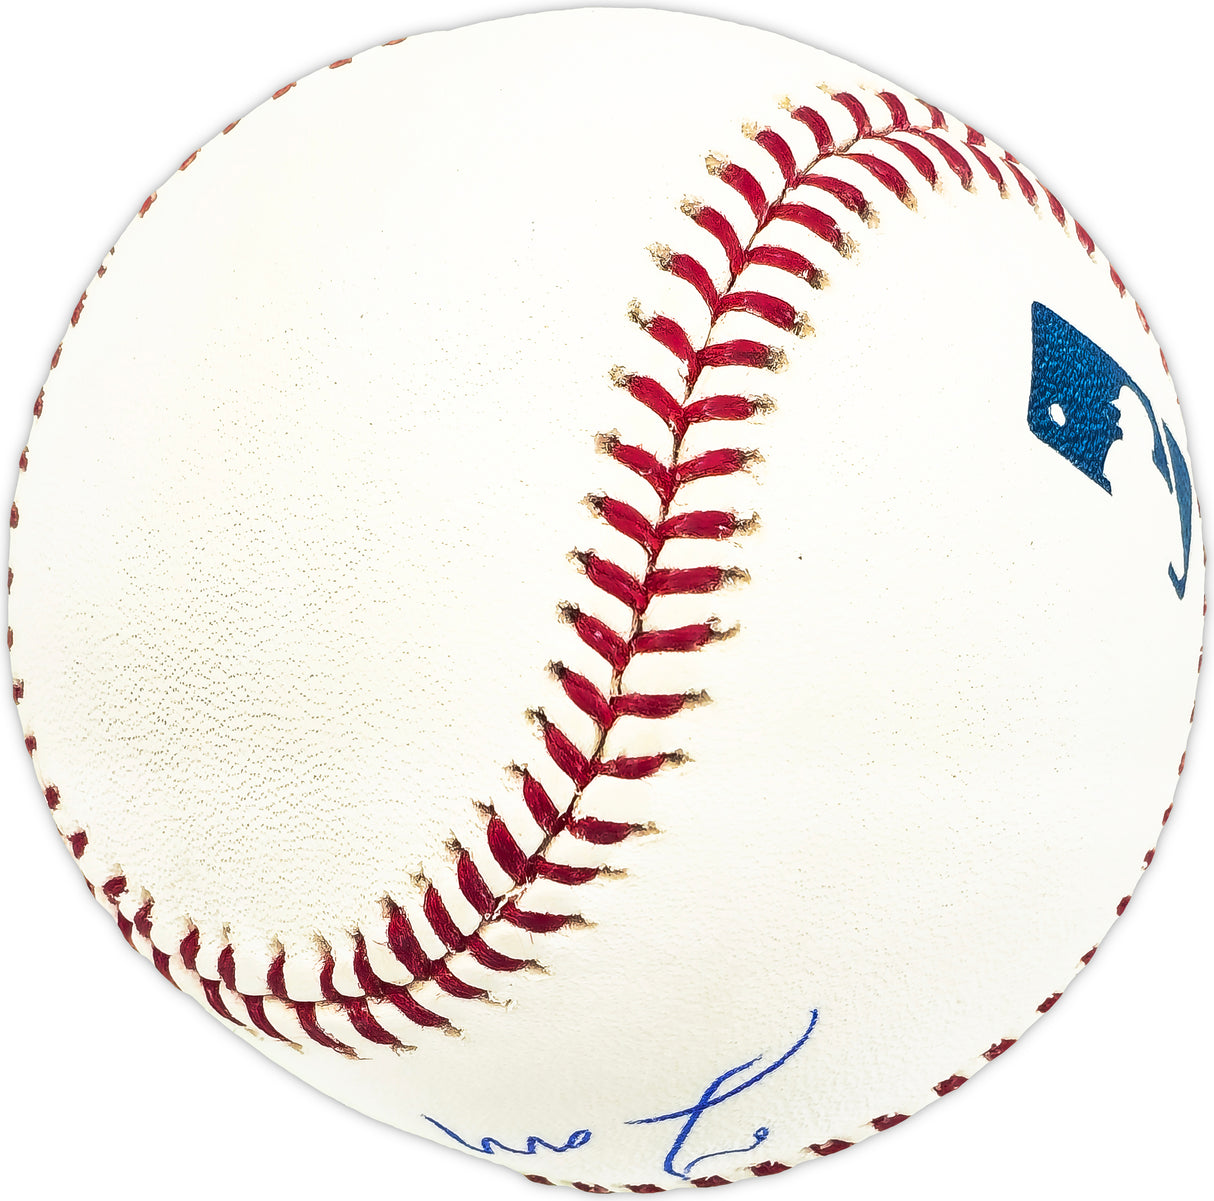 Tom Patton Autographed Official MLB Baseball Baltimore Orioles Beckett BAS QR #BM25952